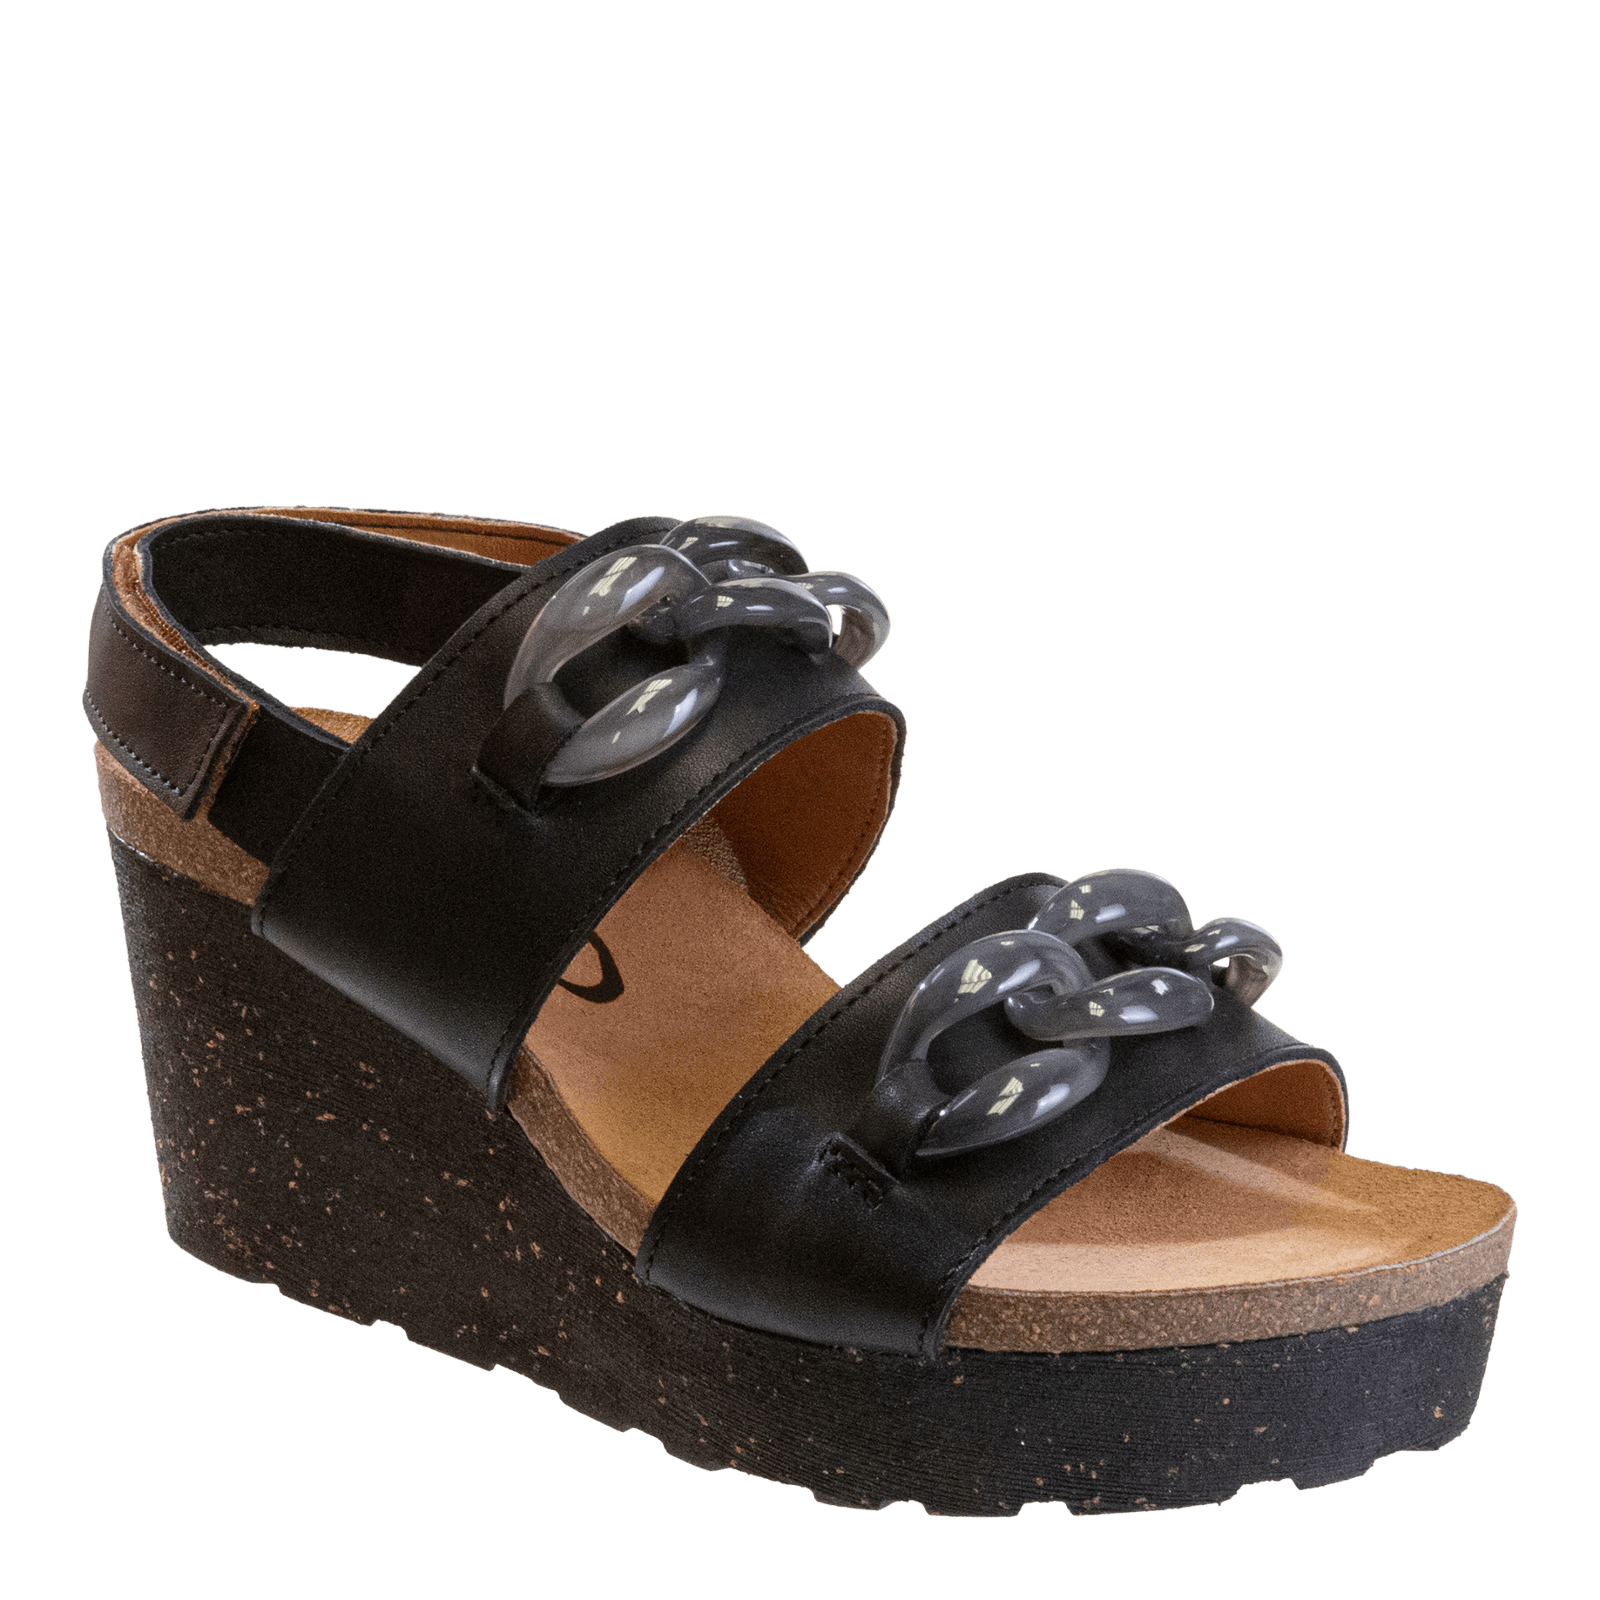 FAIR ISLE in BLACK Wedge Sandals